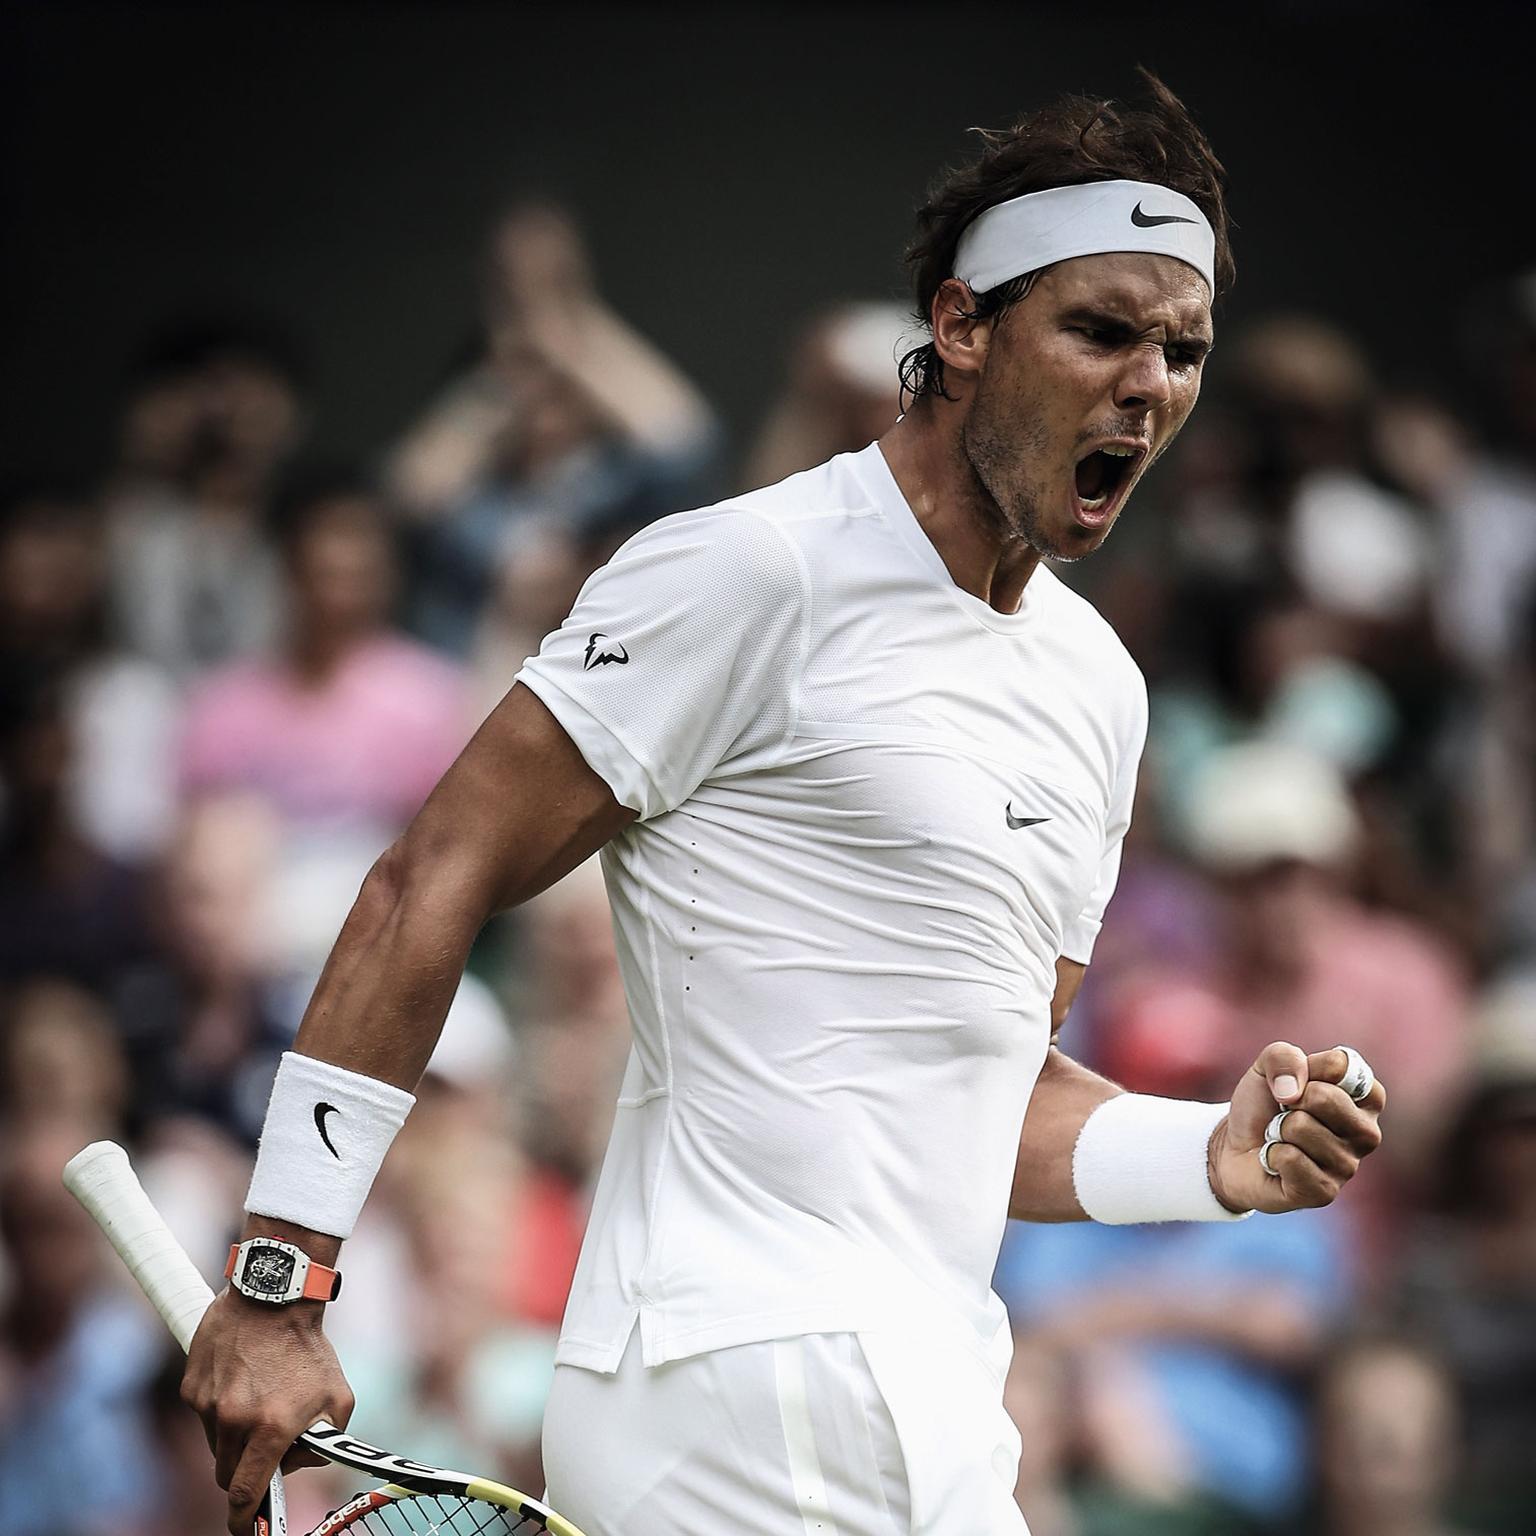 Rafael Nadal wearing a Richard Mille watch